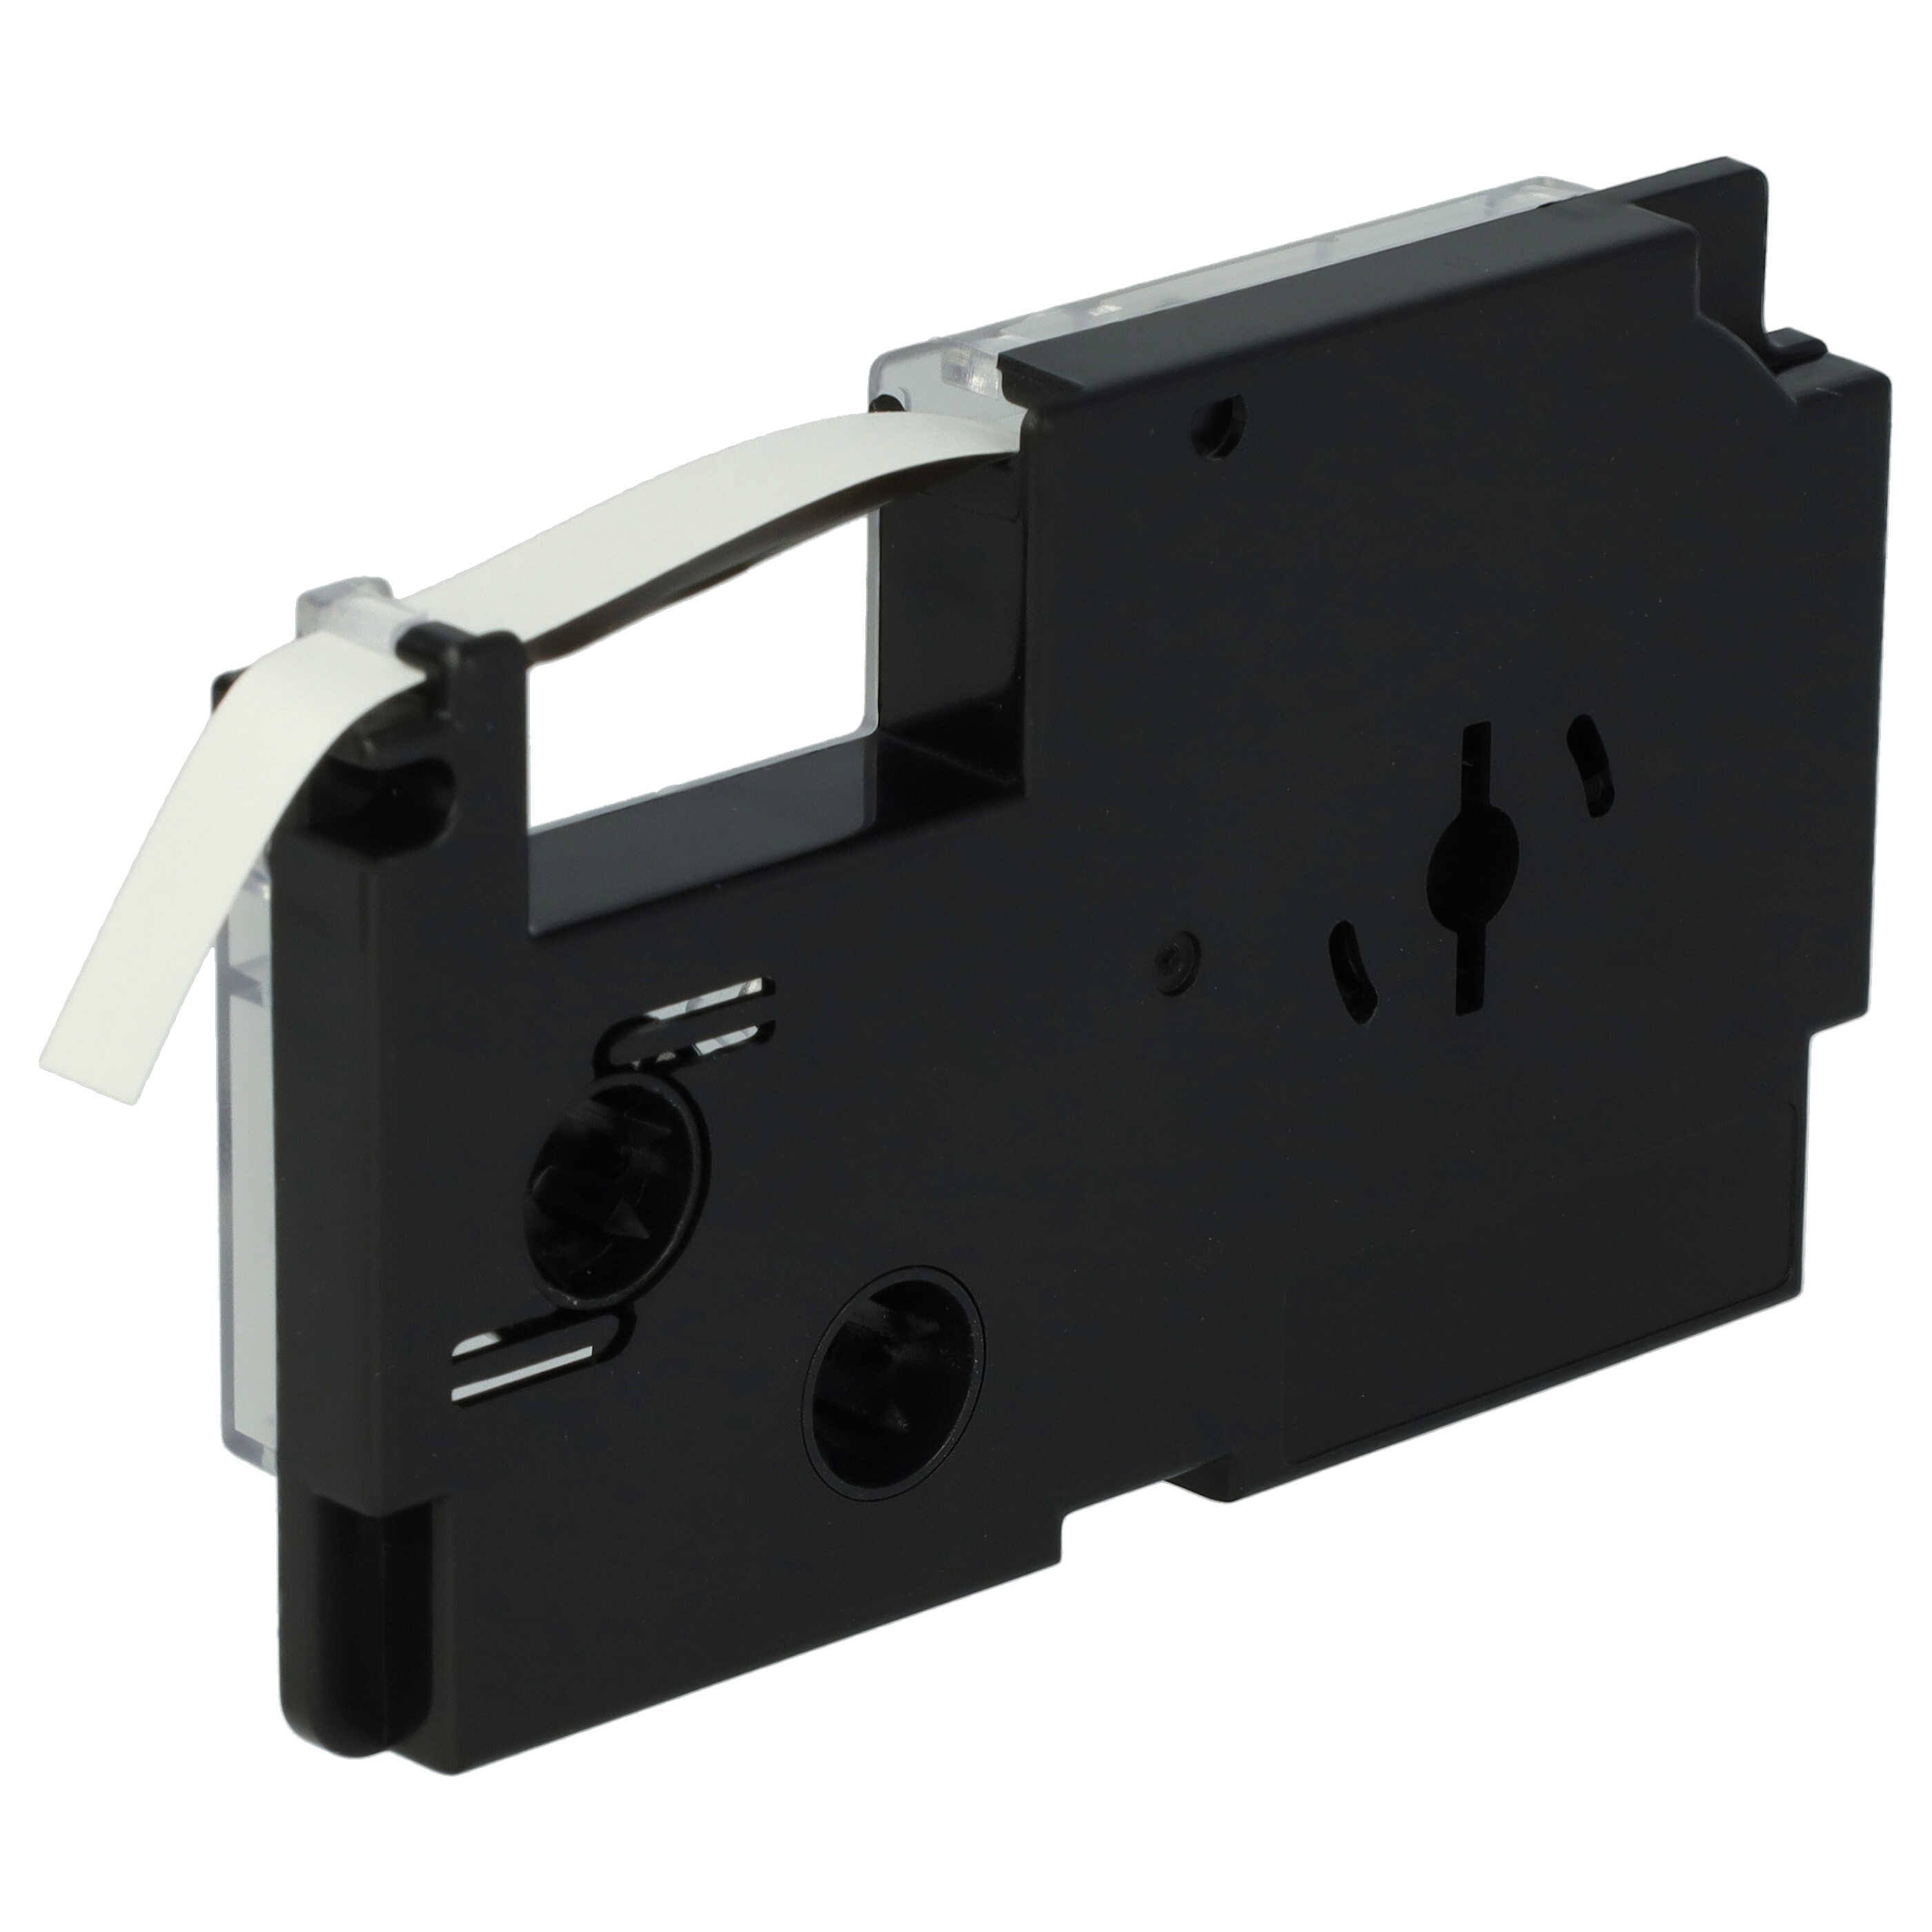 10x Casete cinta escritura reemplaza Casio XR-6WE1, XR-6WE Negro su Blanco